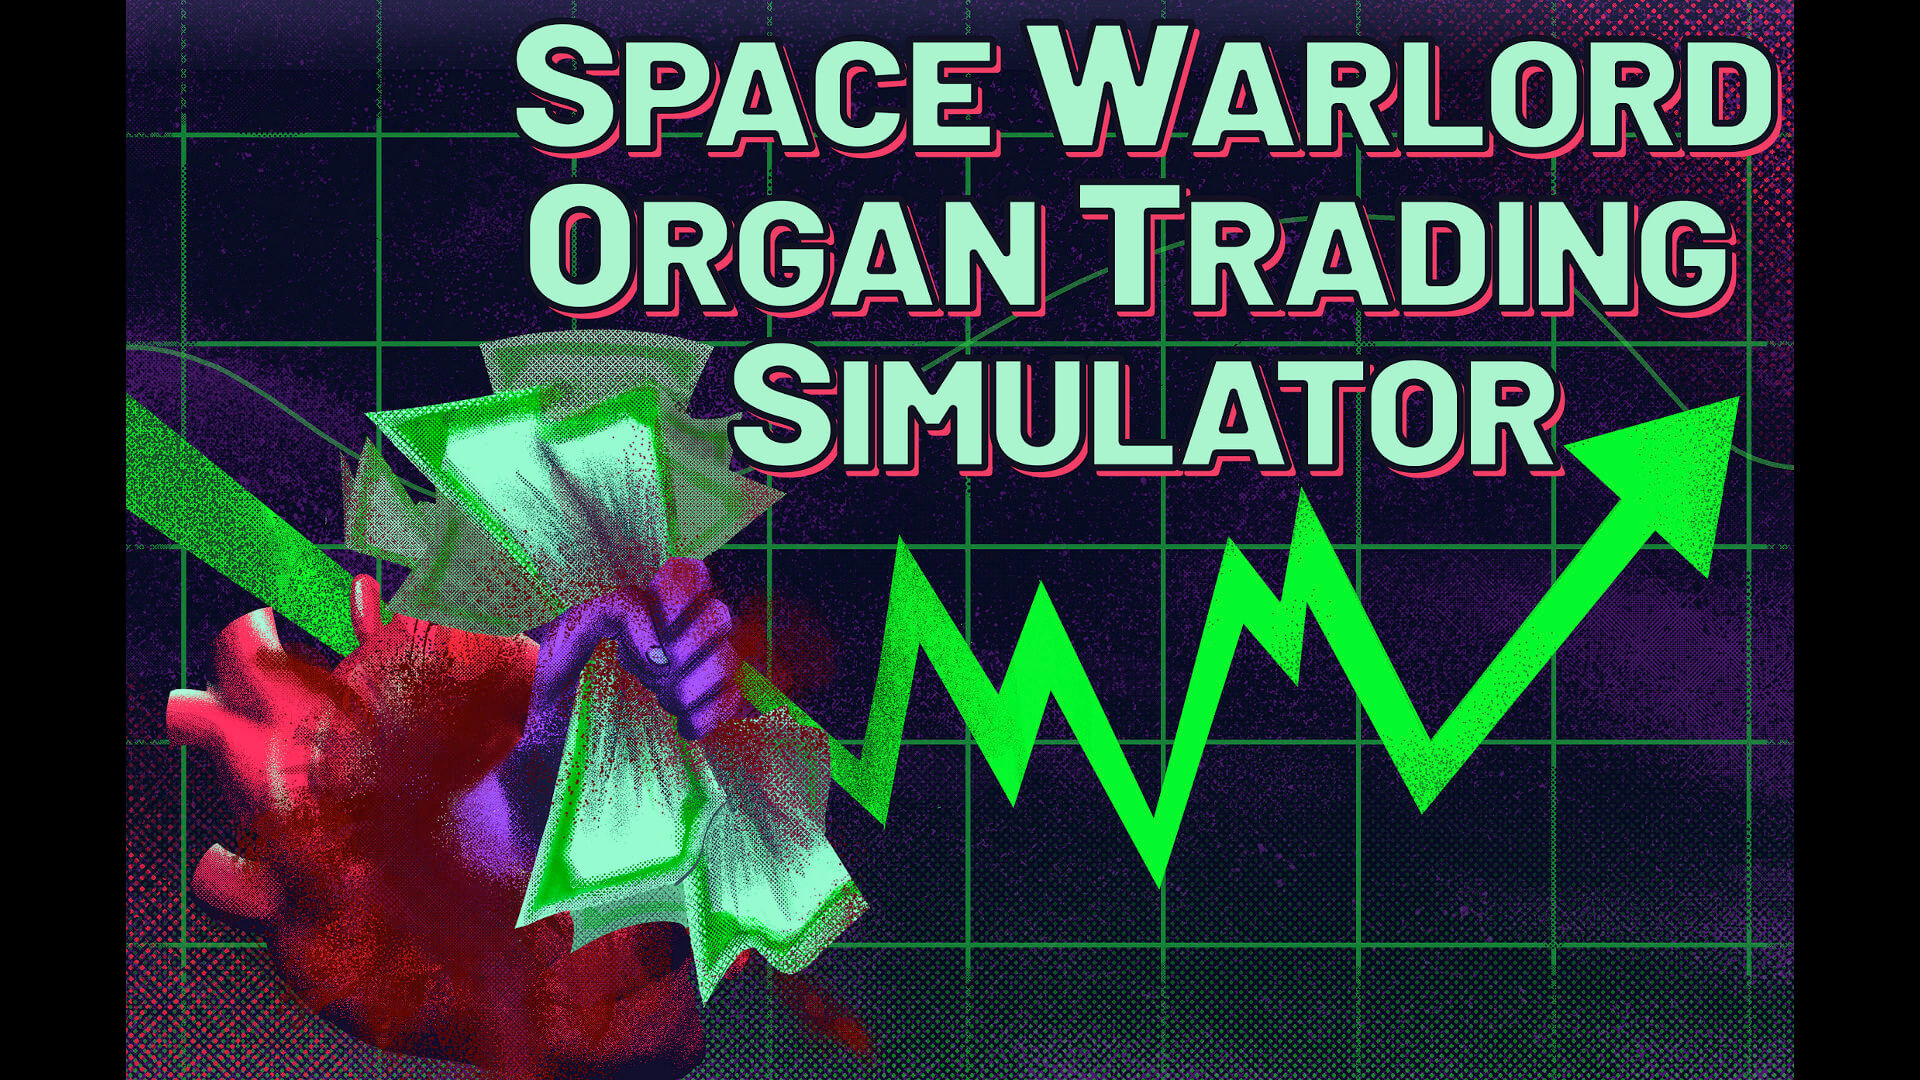 Space Warlord Organ Trading Simulator Key Art